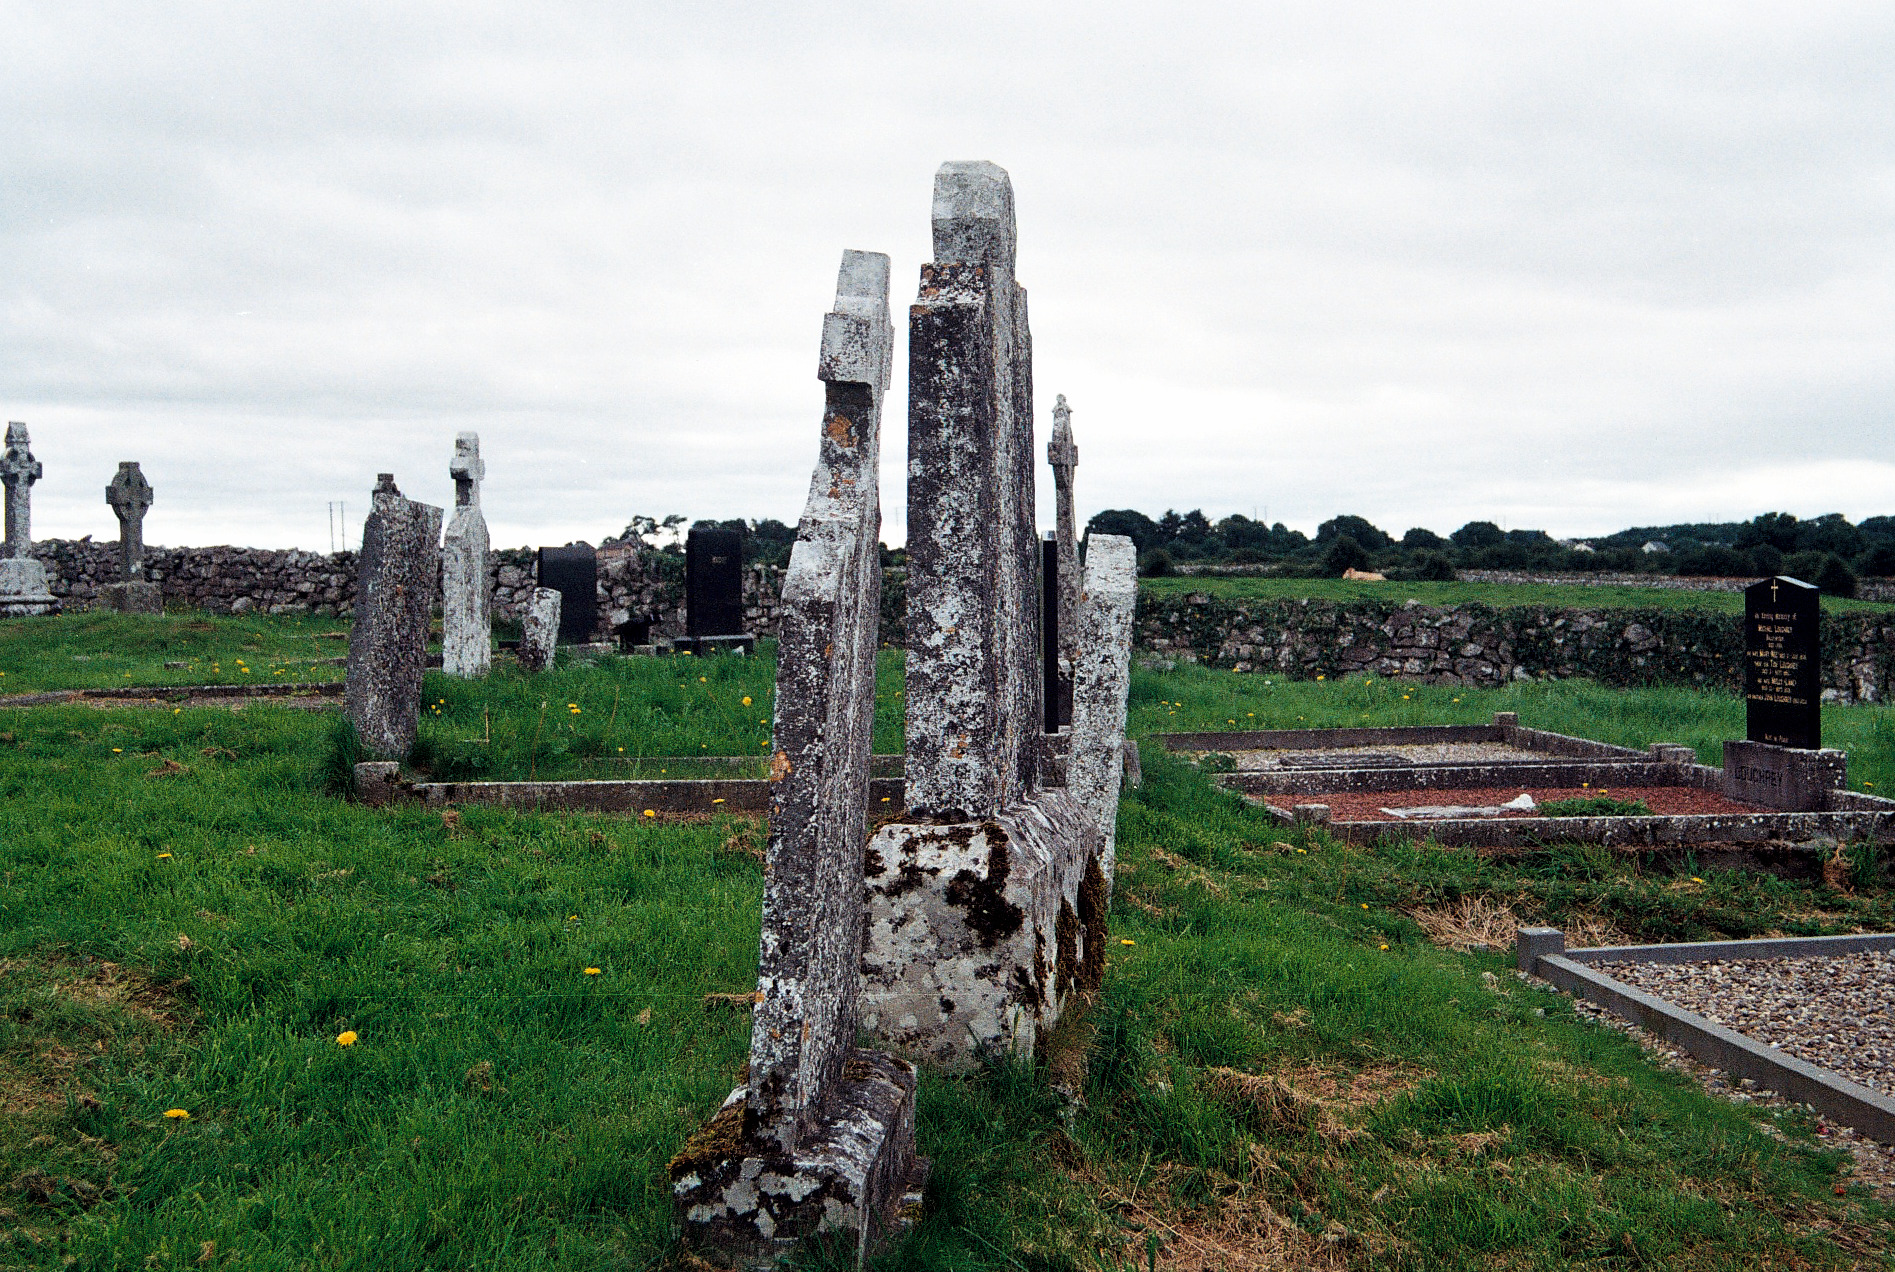    The Burren, Ireland. &nbsp;35mm film, 2012.  